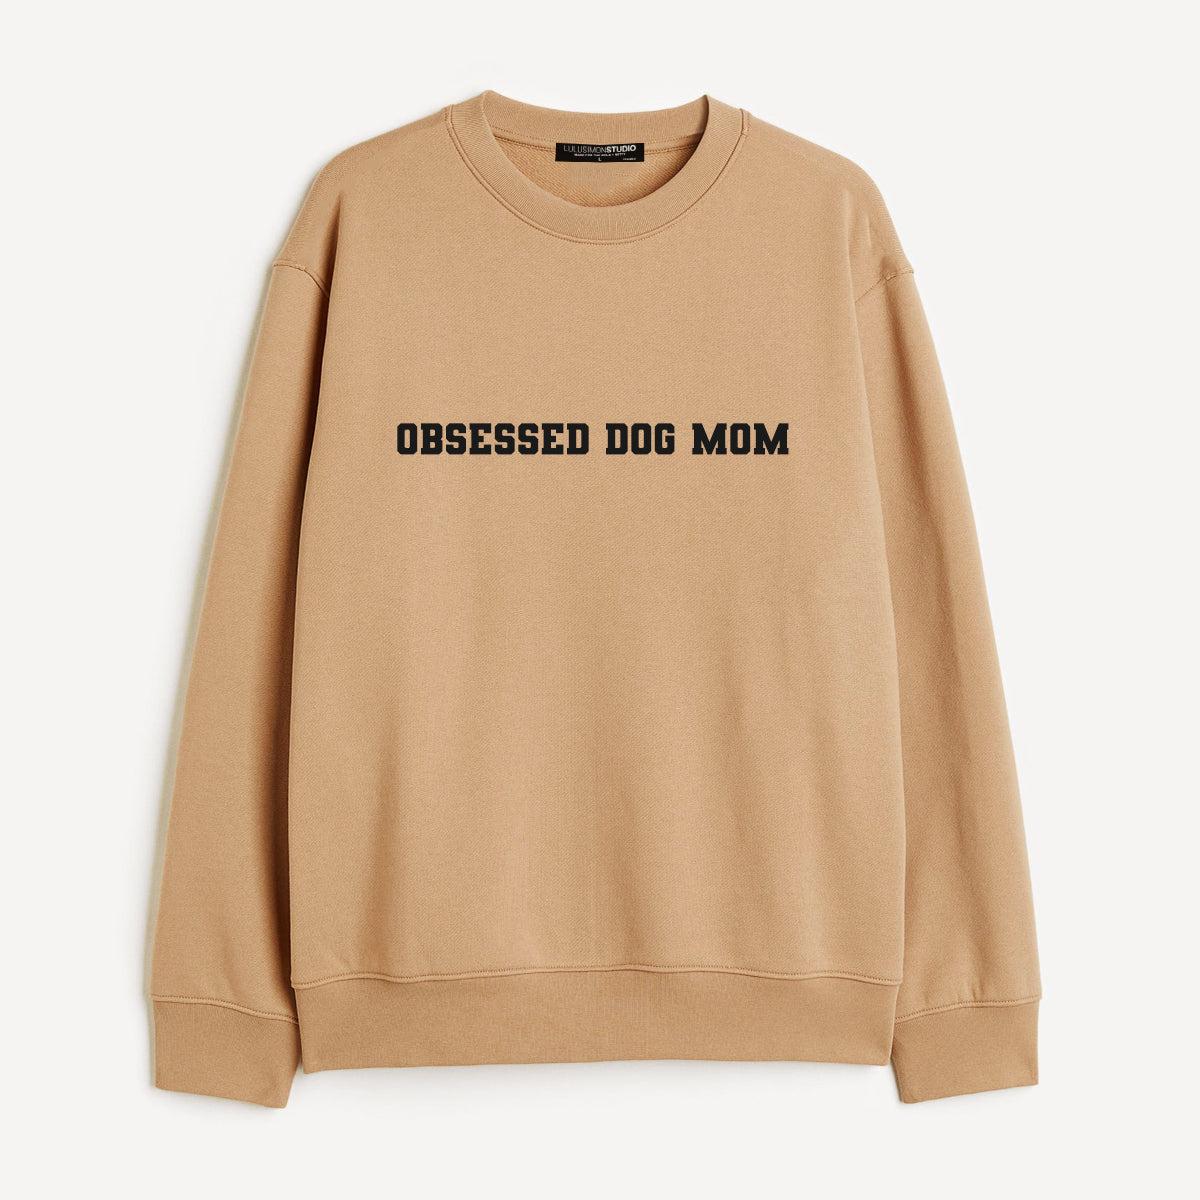 Obsessed Dog Mom Sweatshirt